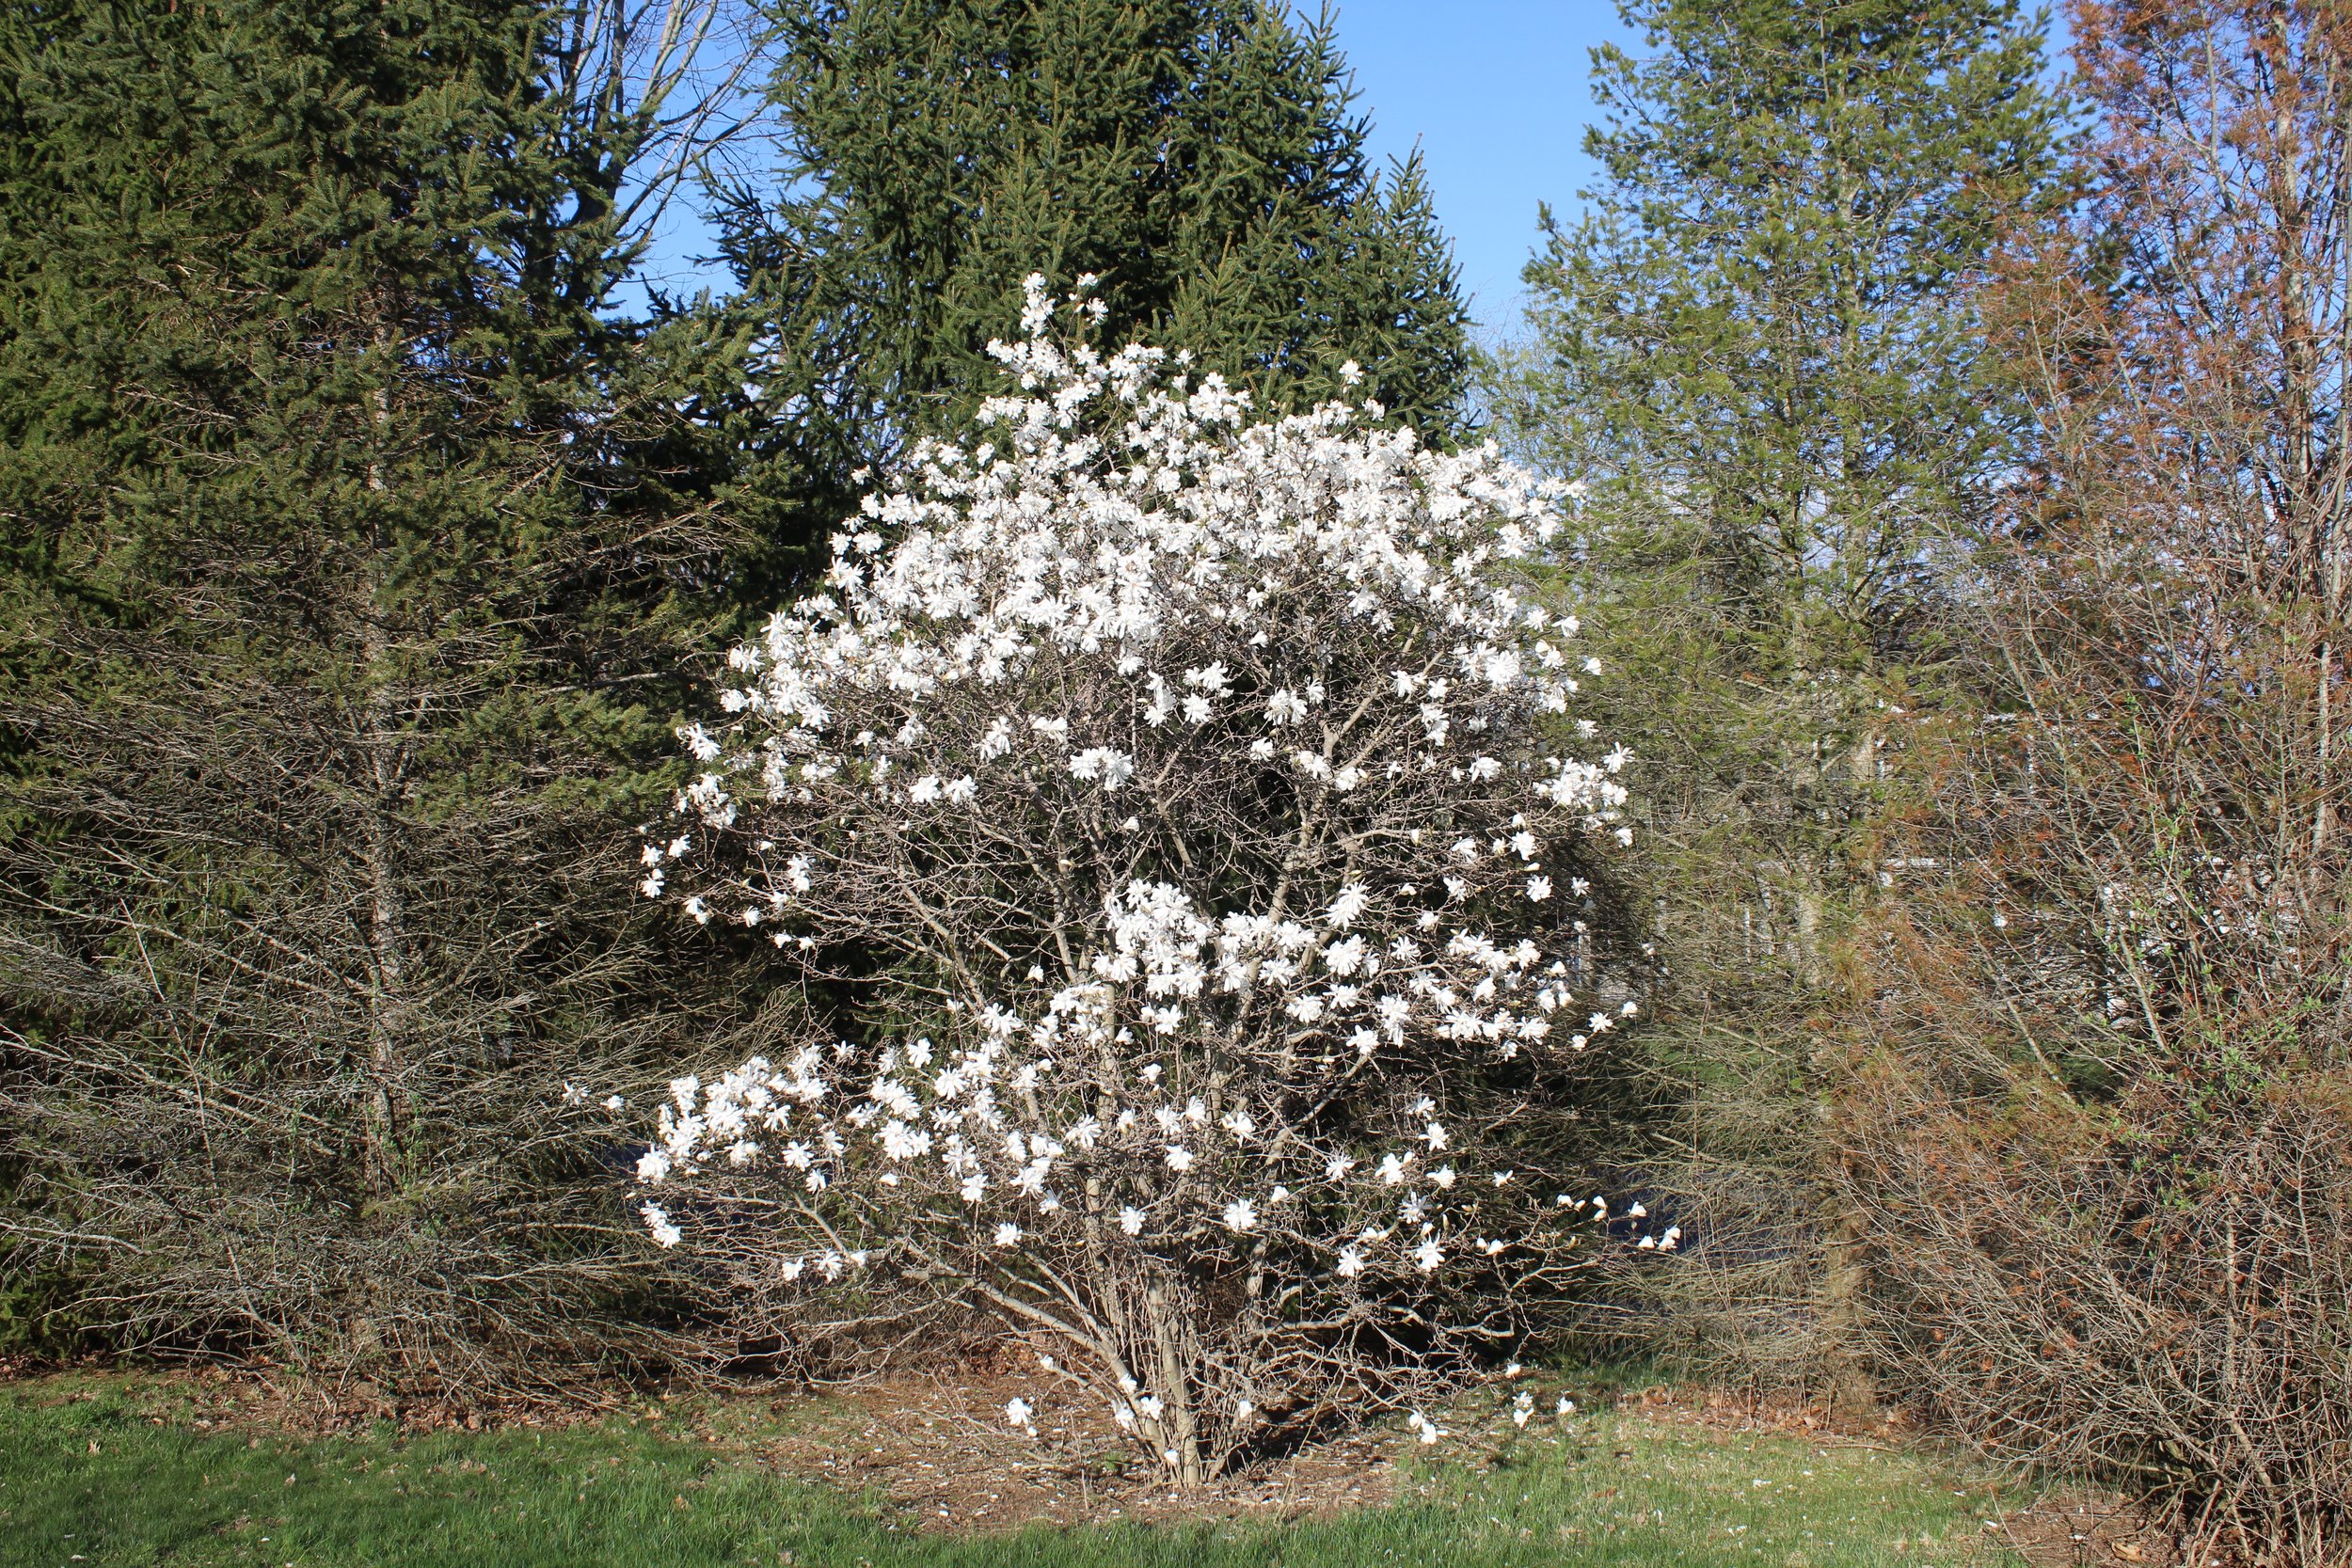 Star Magnolia size and habit (M. stellata)